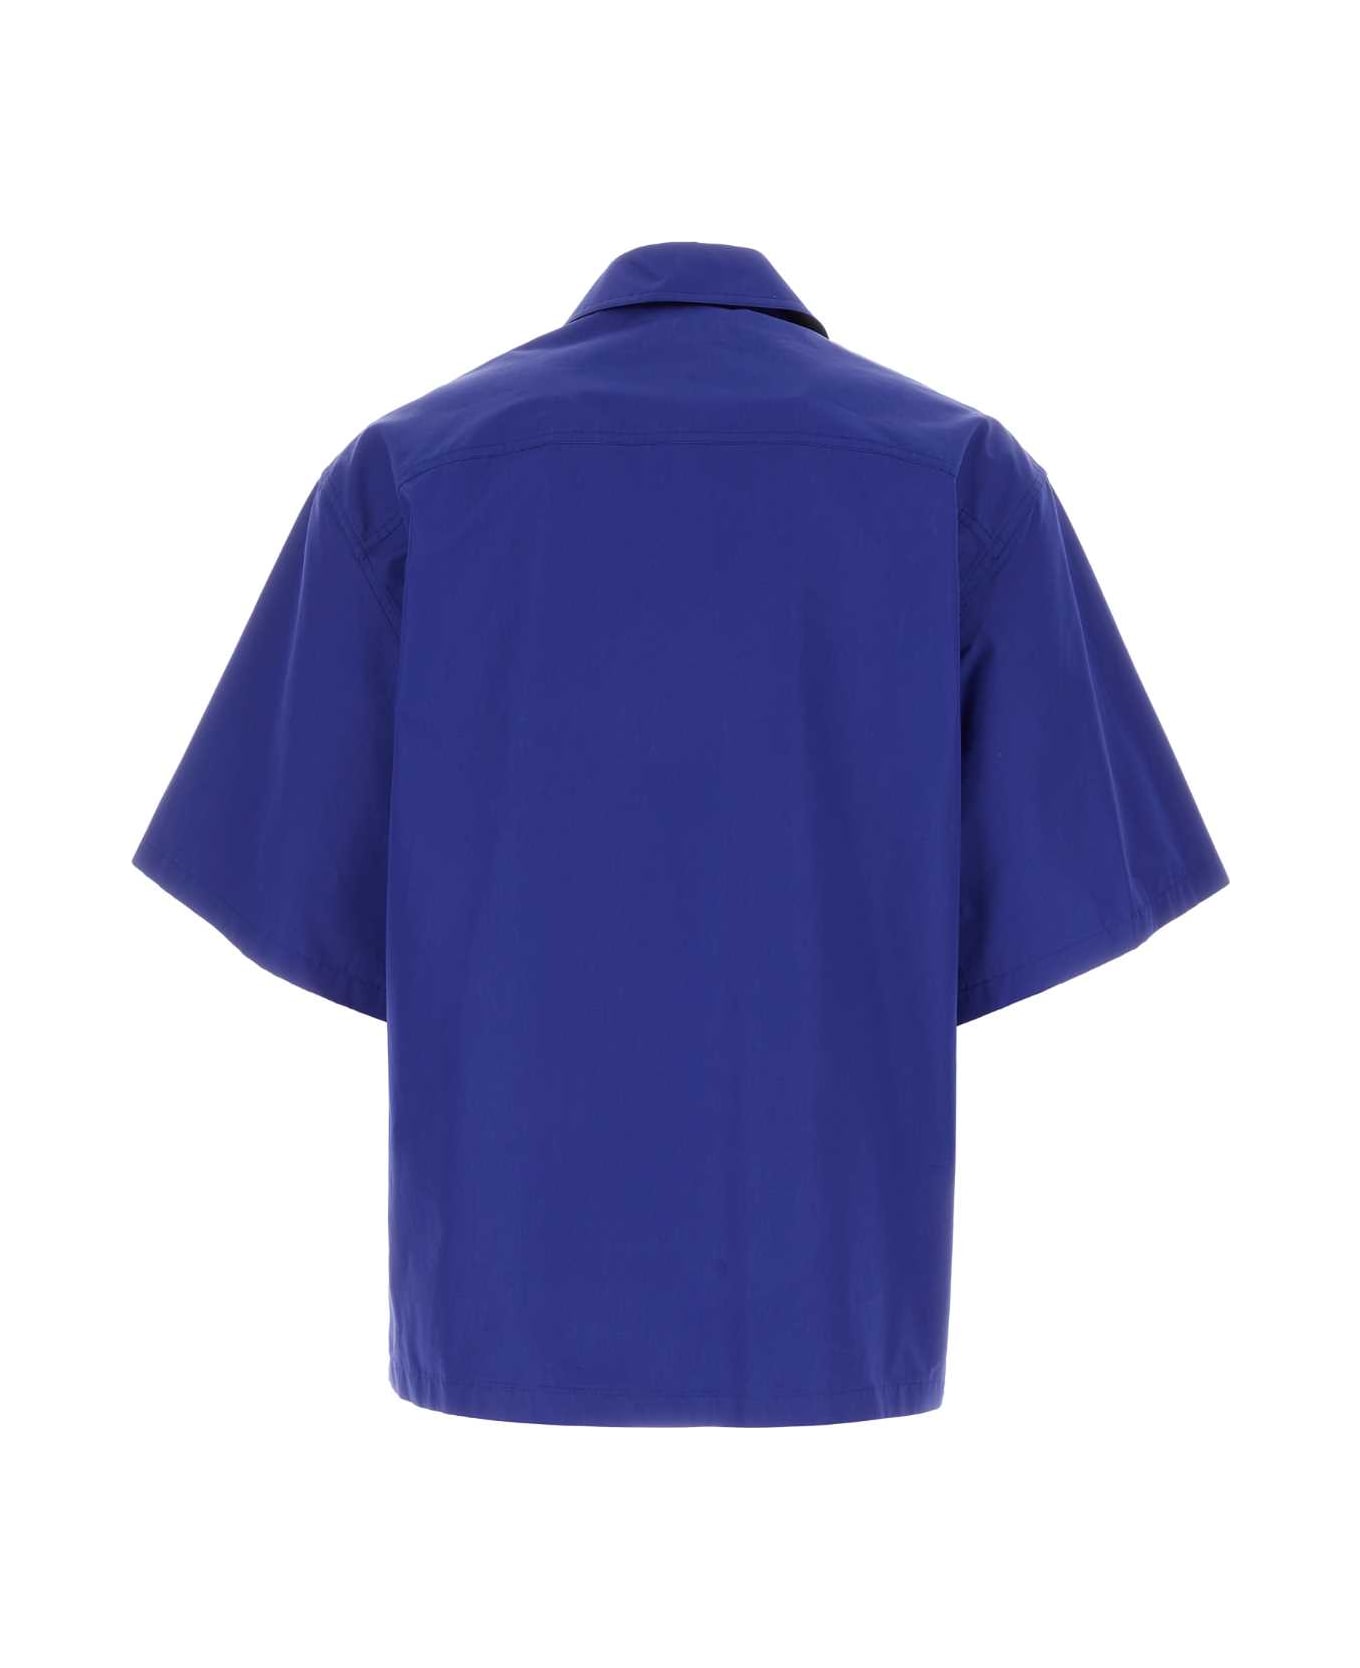 Off-White Blue Cotton Oversize Shirt - BLUEBLK